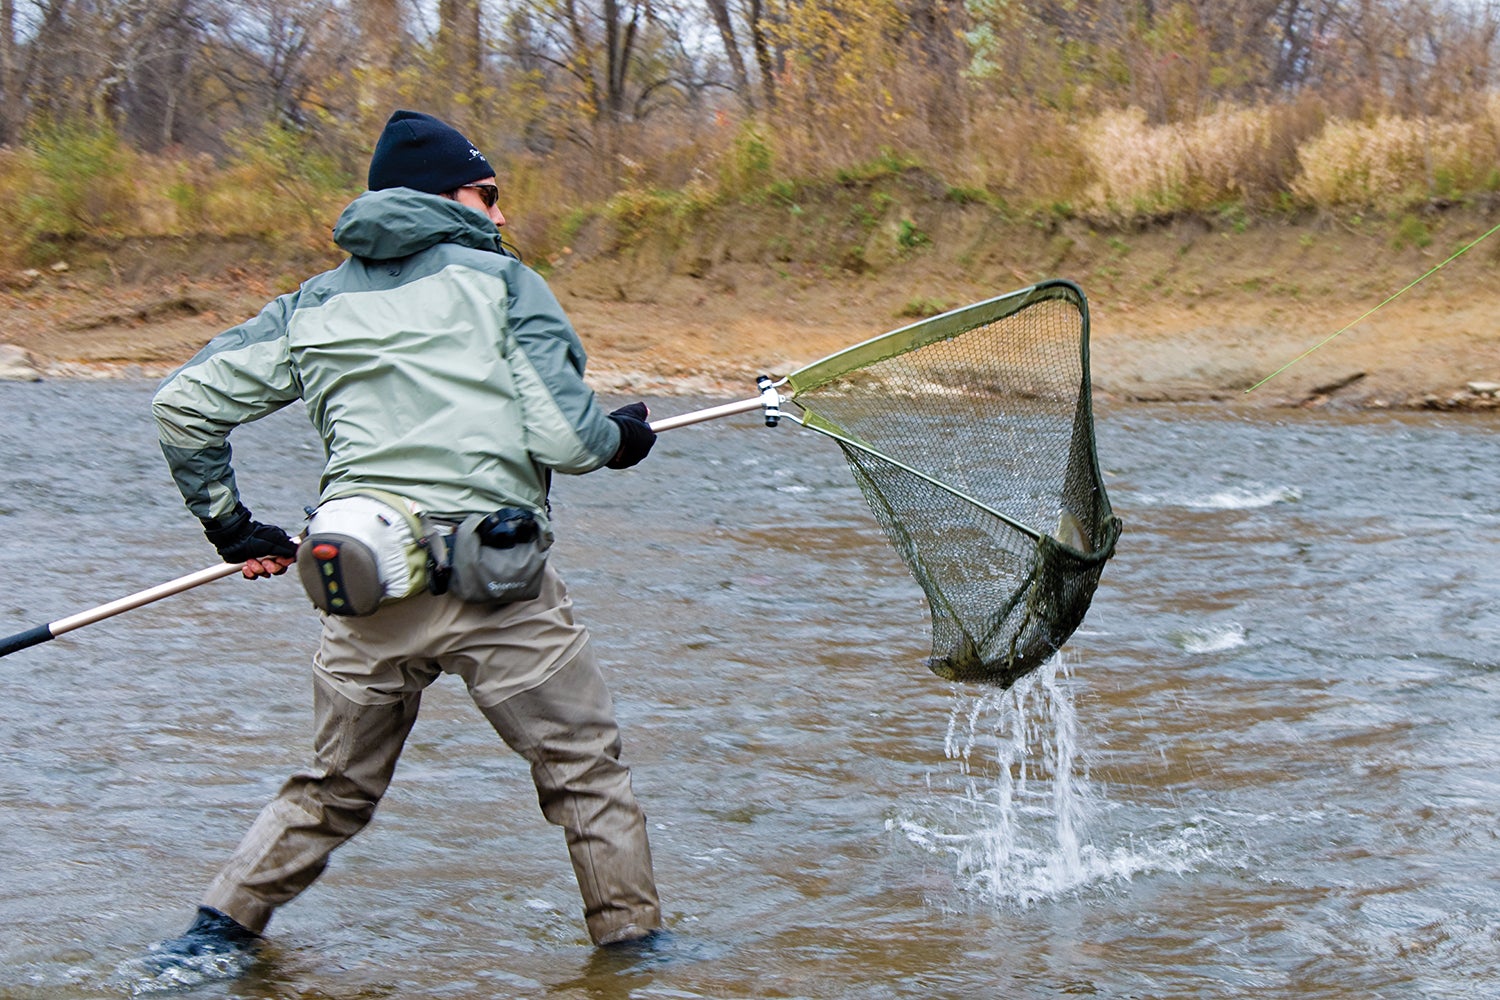 Angler lifts steelhead from river in net.